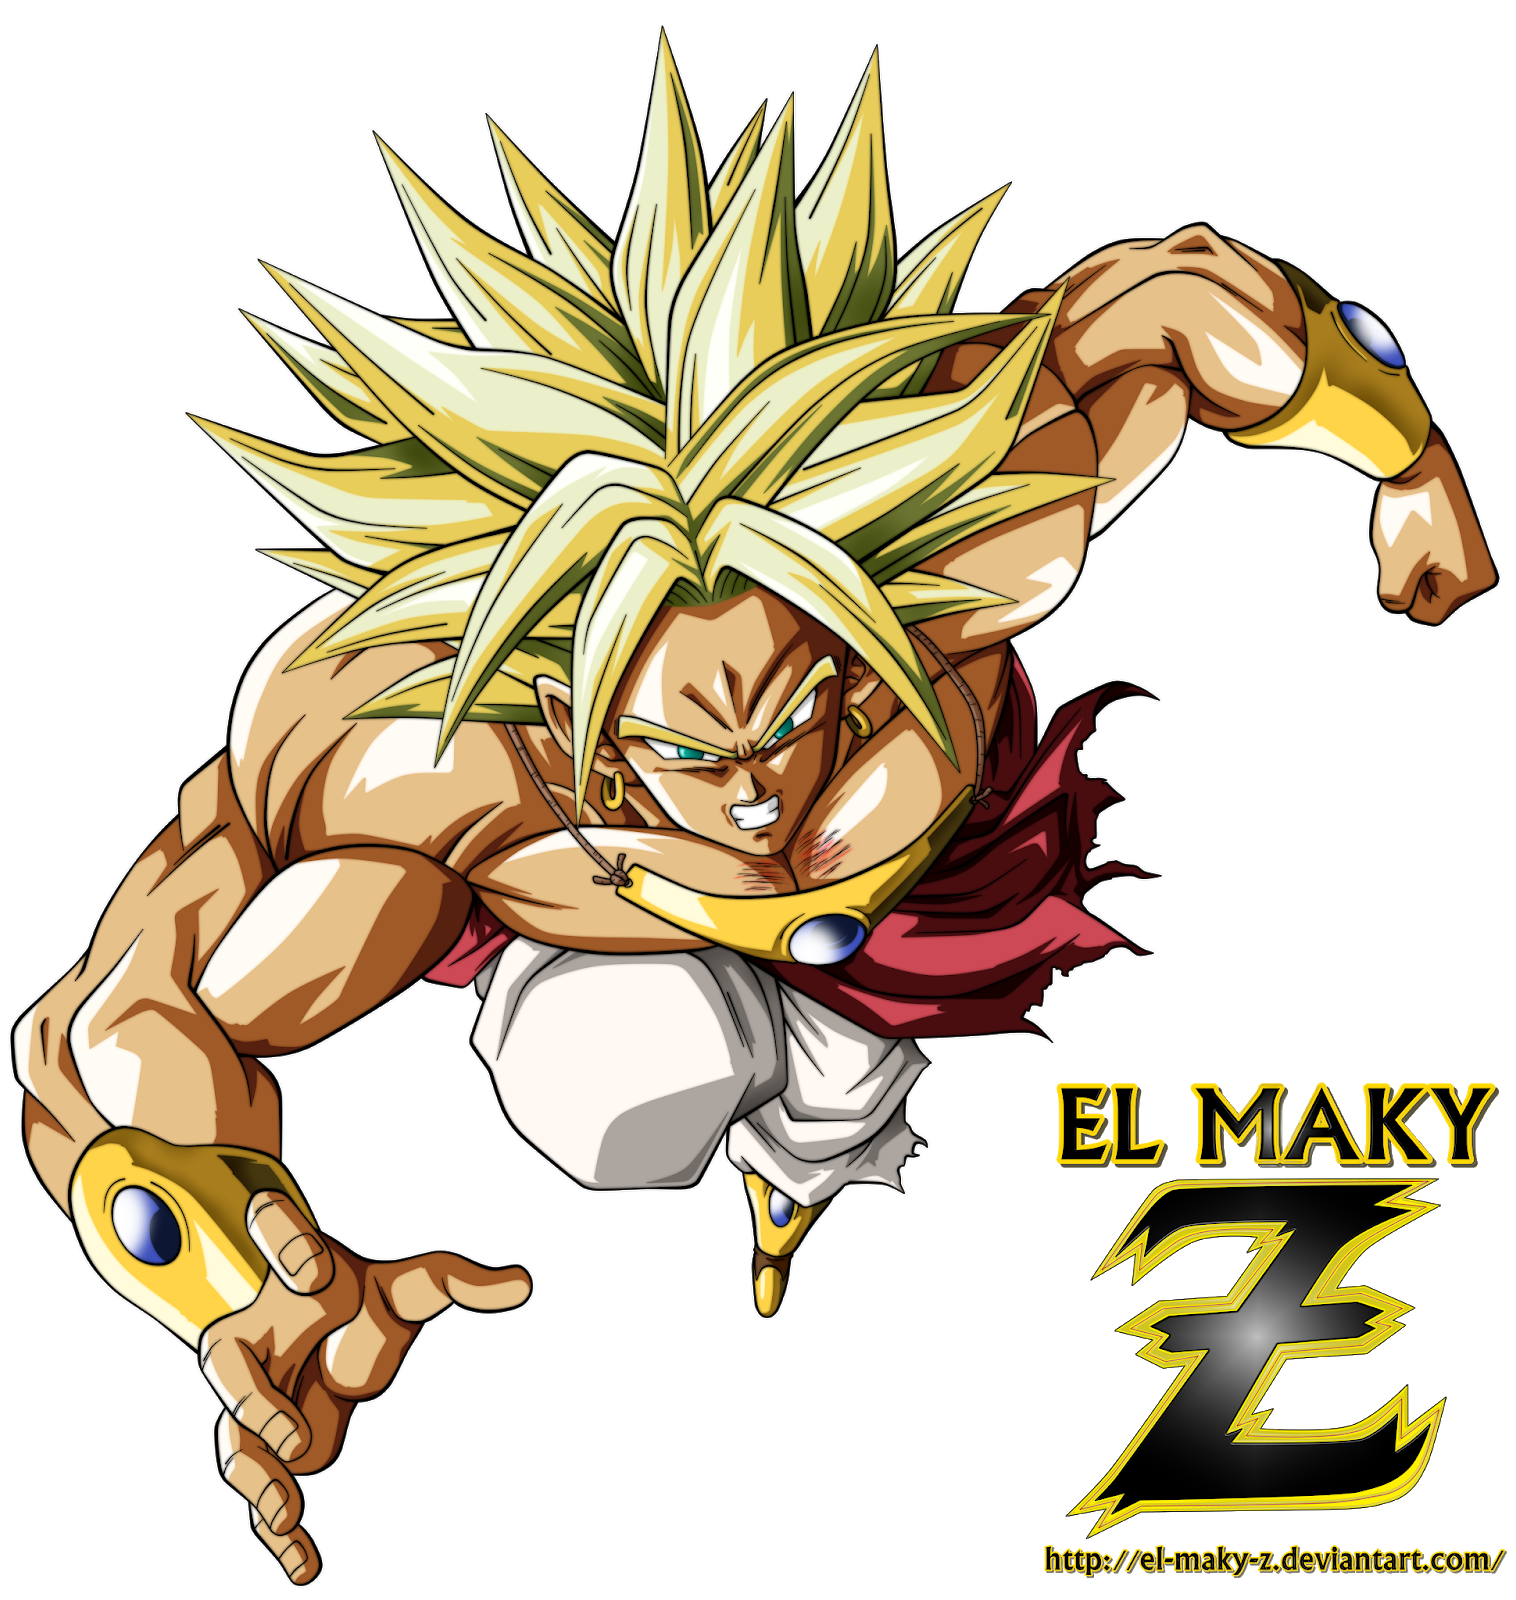 Maky Z Blog: (Card) Broly Super Saiyan (Dragon Ball Z)